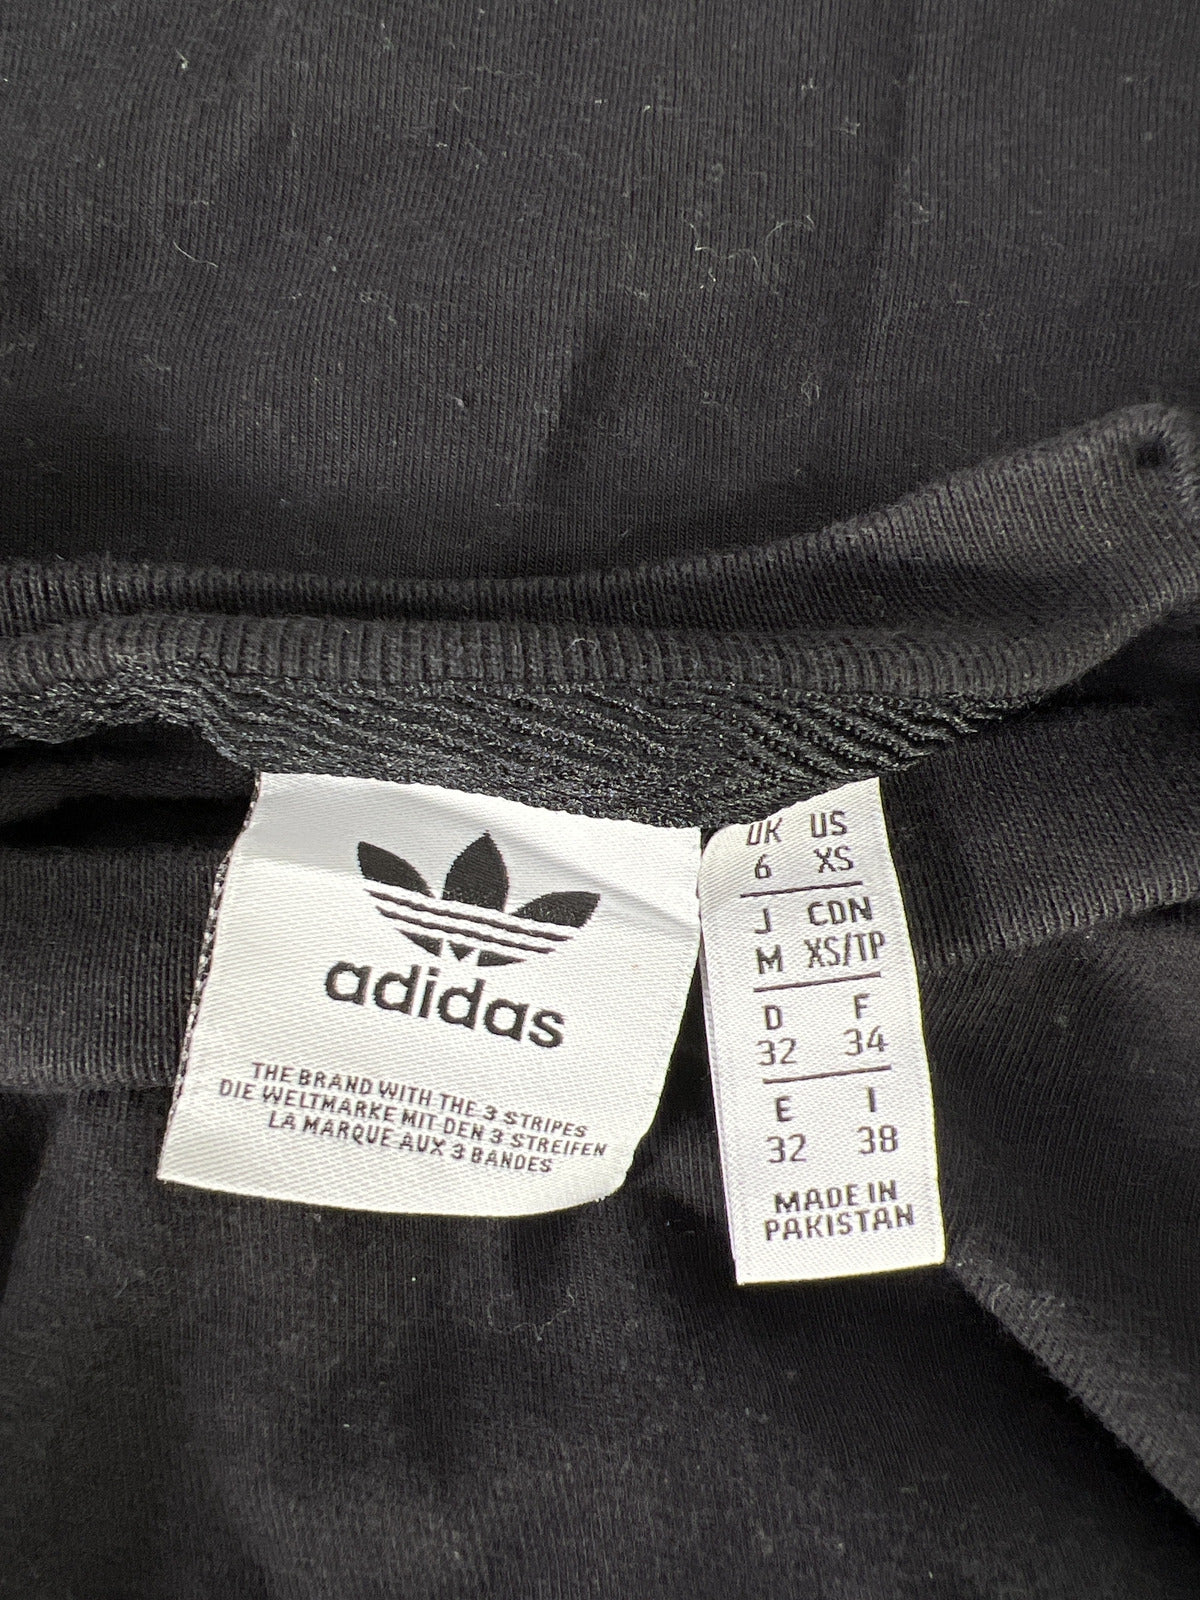 Adidas Women’s Black Trefoil Short Sleeve T-Shirt - XS